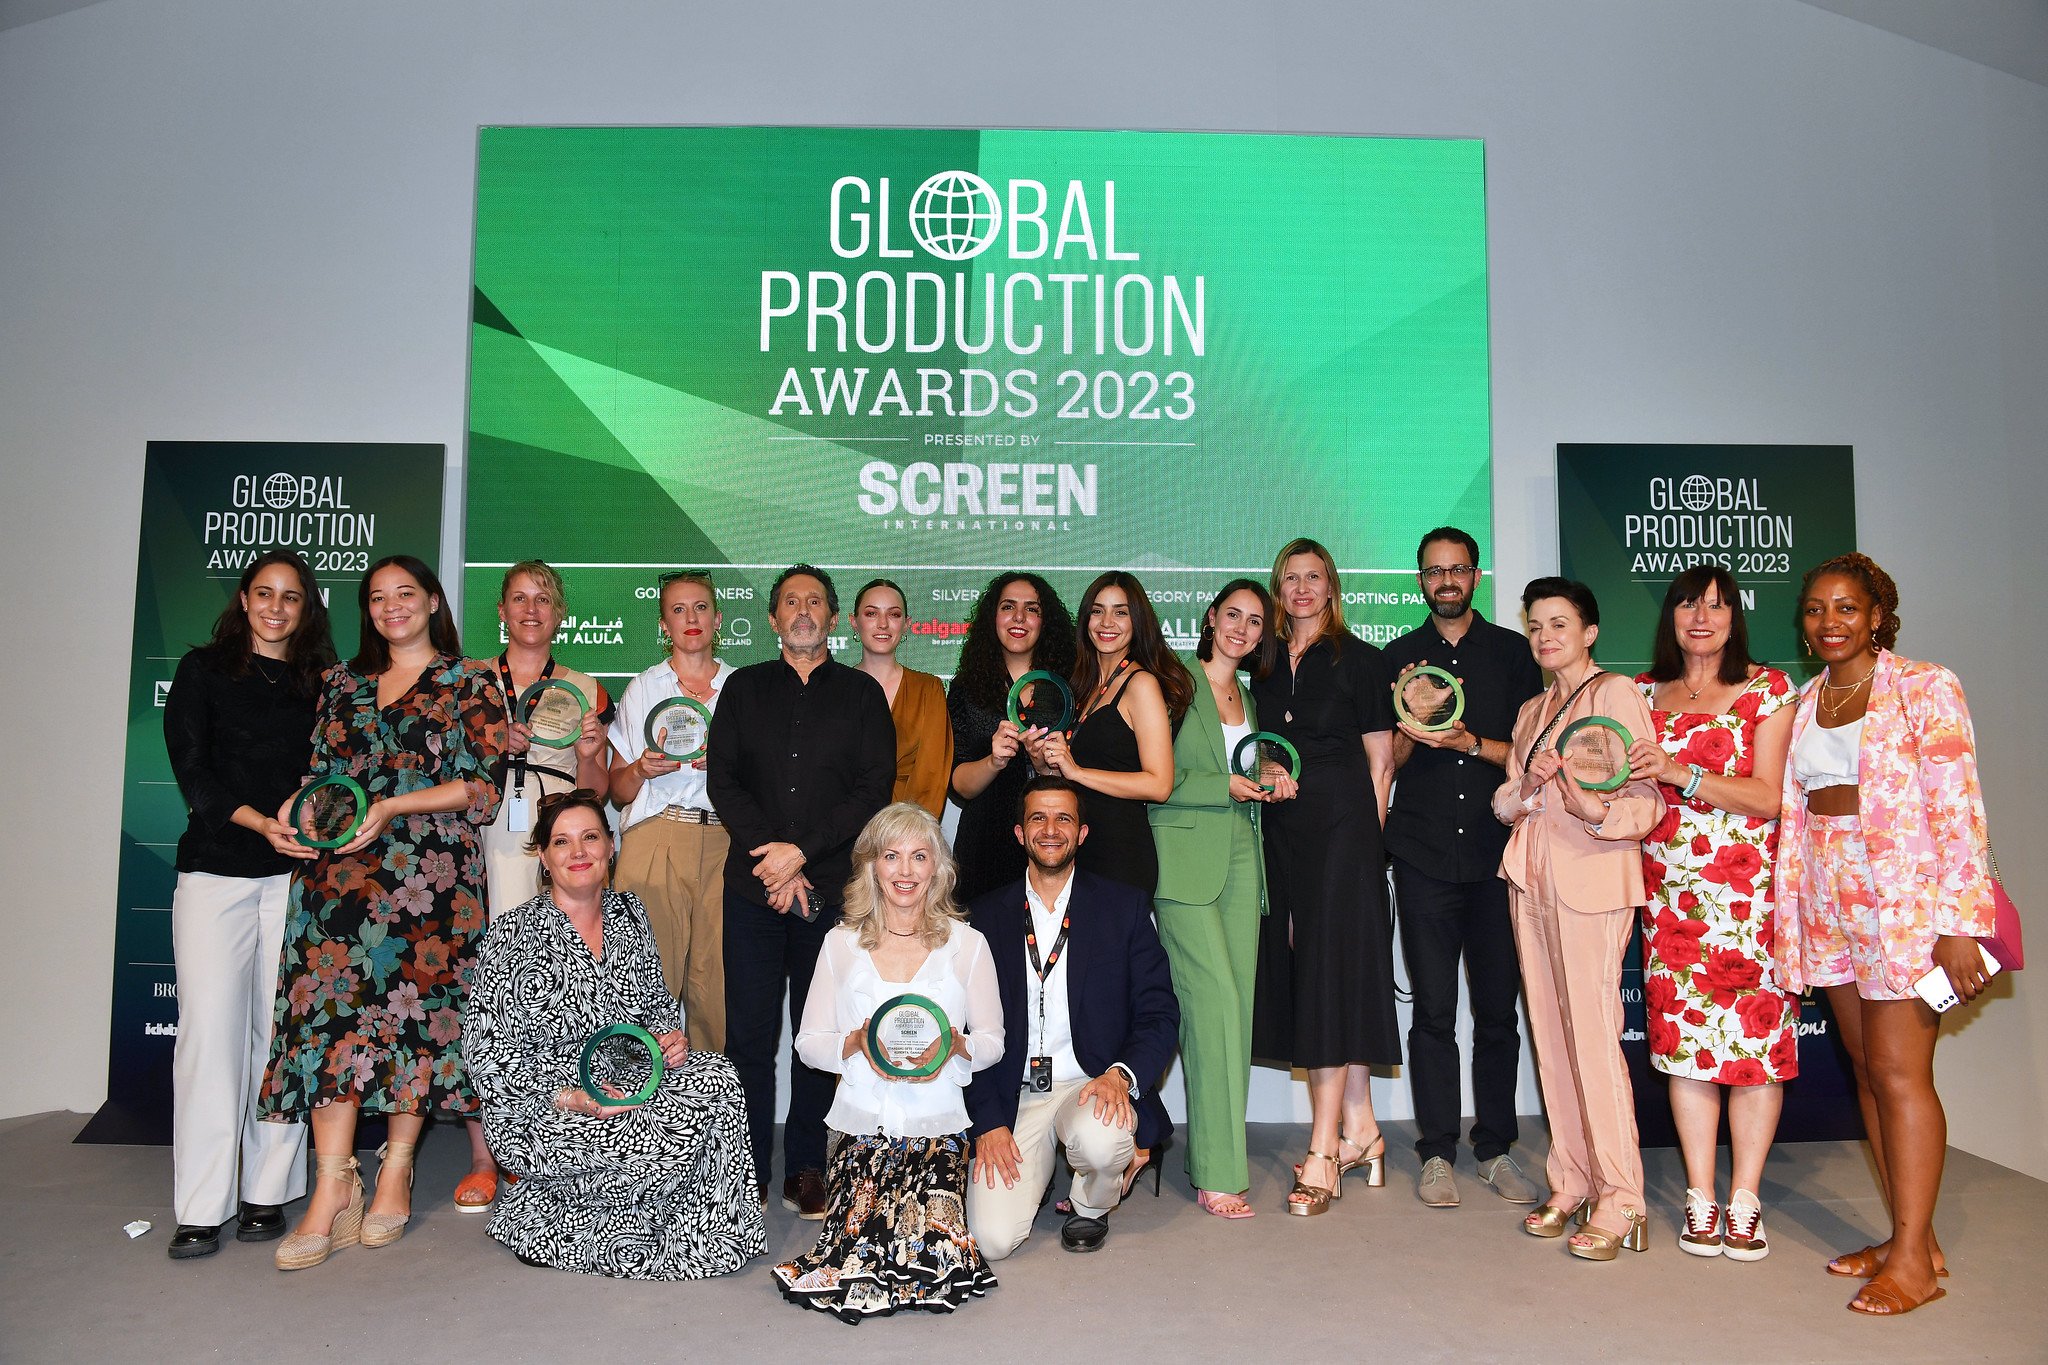 Global Production Awards 2023 winners